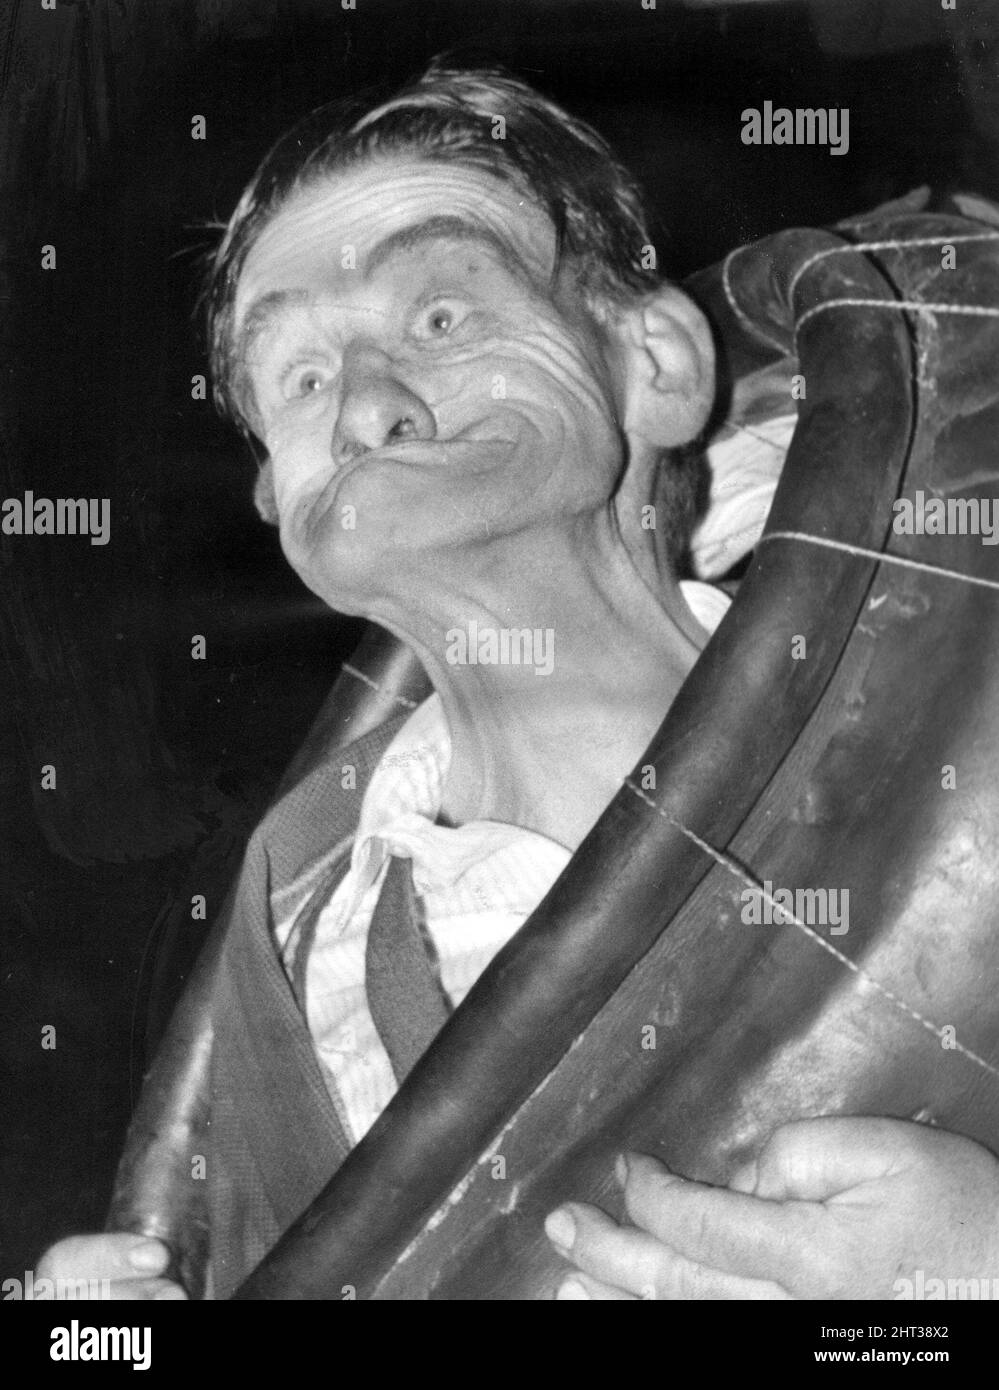 Mr Bennison demonstrates the winning twist - gurning. 18th September 1965 Stock Photo